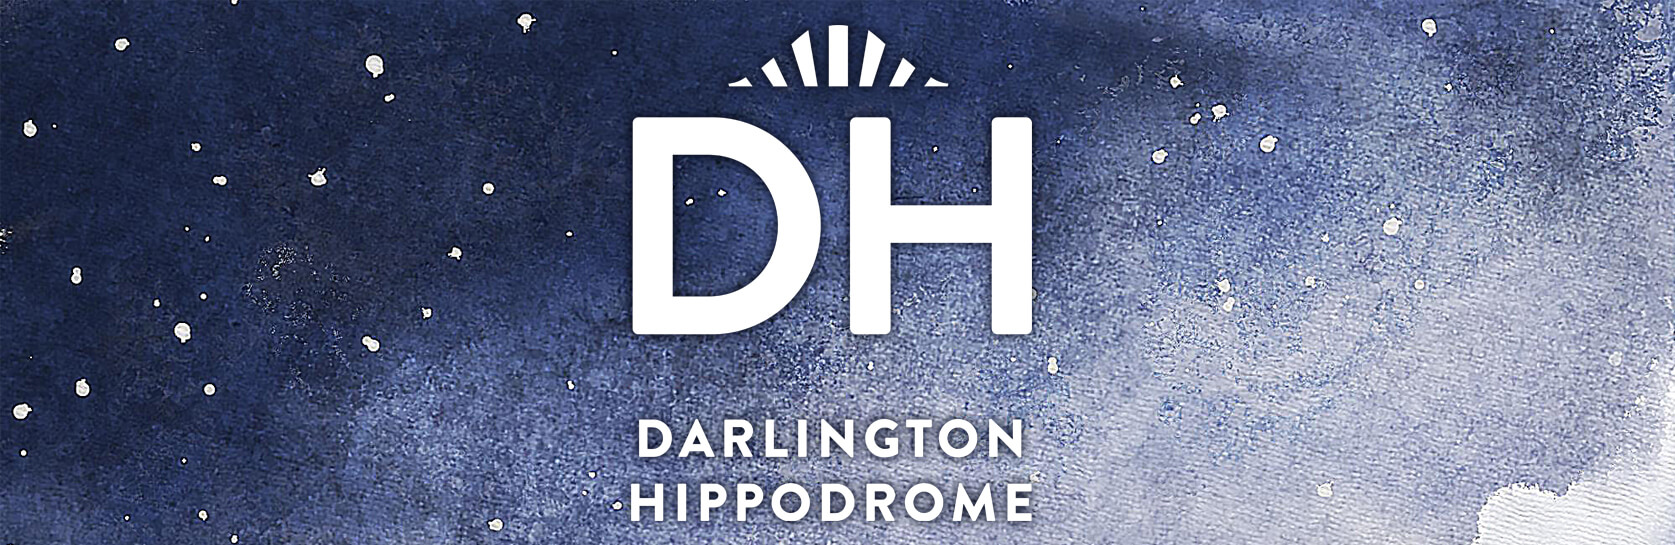 Darlington Hippodrome privacy notice